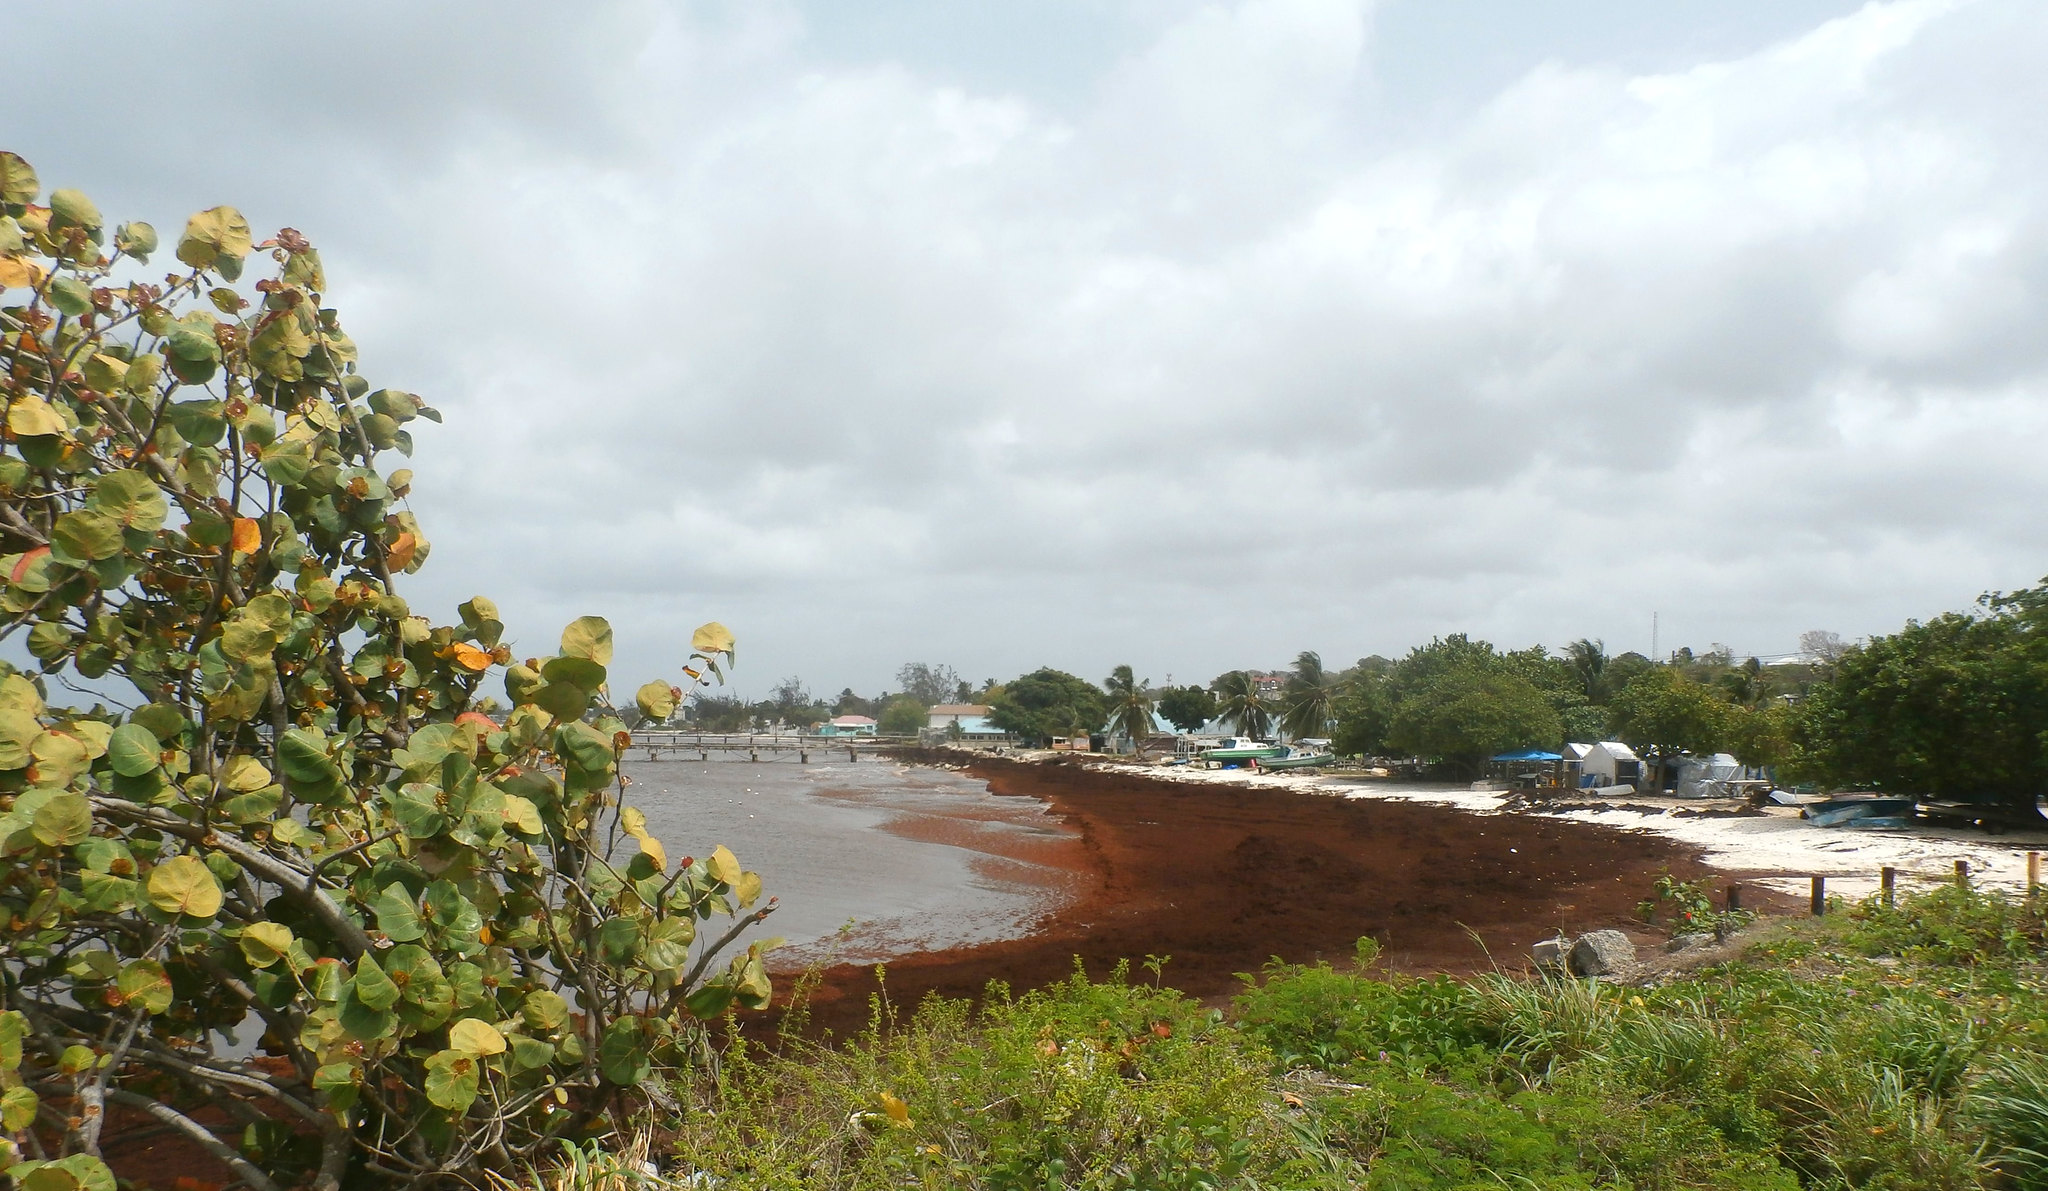 Sargassum overgrown in Oistins, Barbados, in 2018.